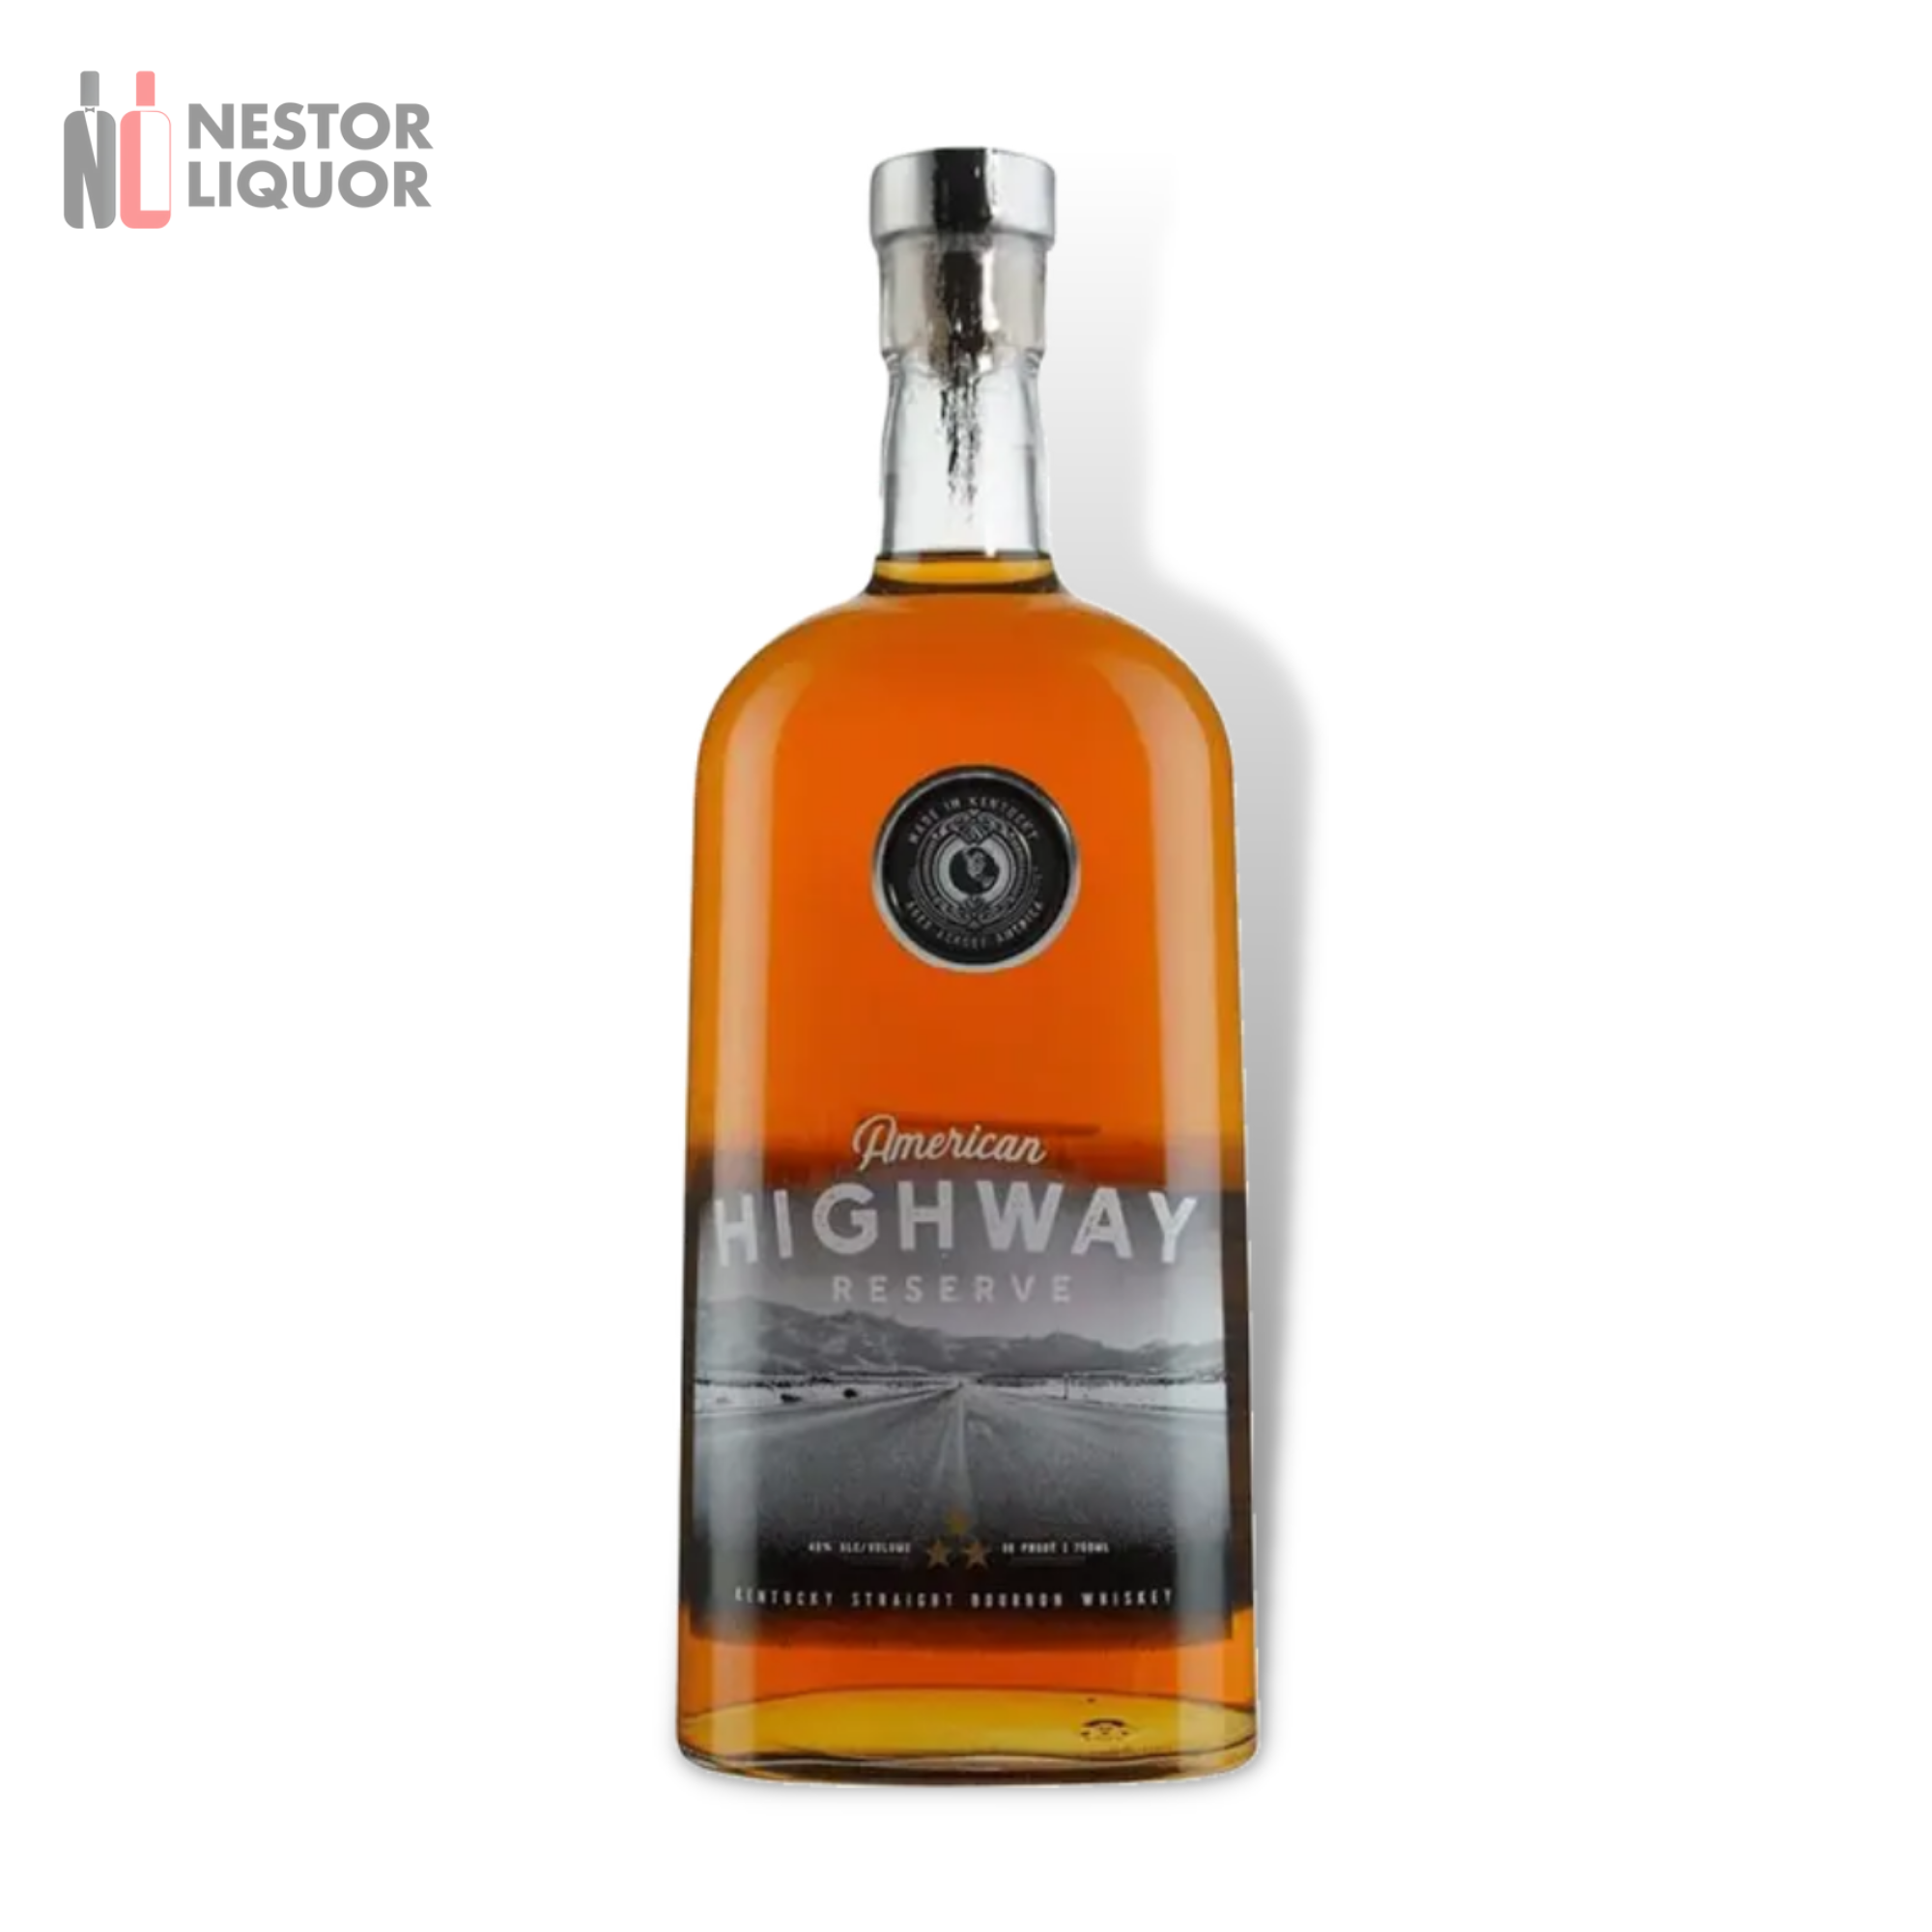 American Highway Reserve - 750ml_nestor liquor